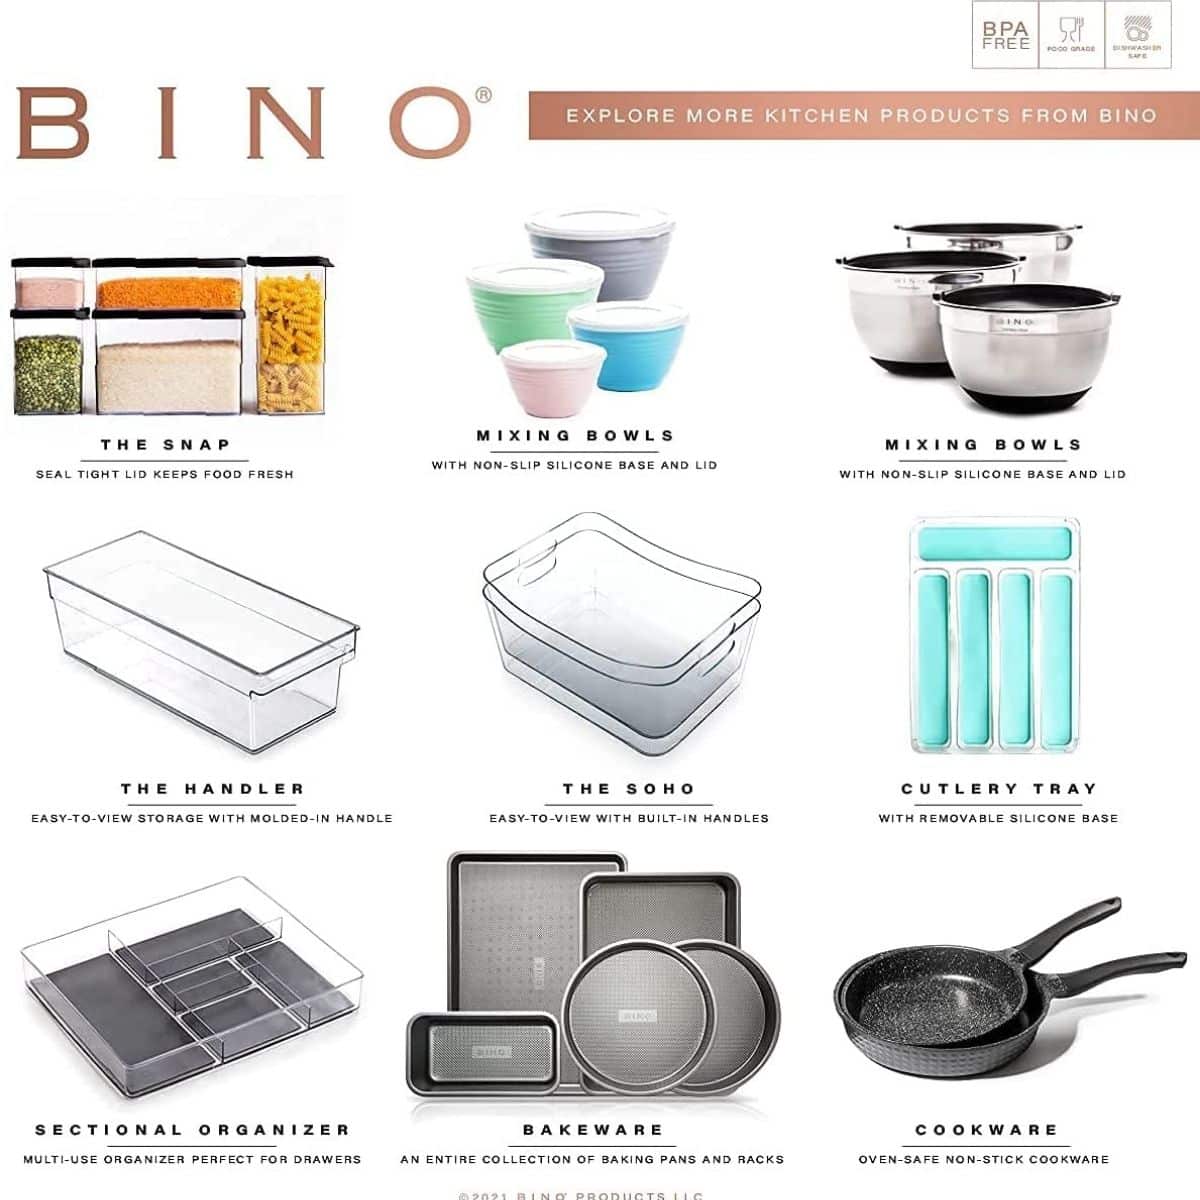 BINO, Plastic Storage Bins, Square – 3 Pack, THE LUCID COLLECTION, Multi-Use Organizer Bins, Built-In Handles, BPA-Free, Pantry Organization, Home Organization, Fridge Organizer